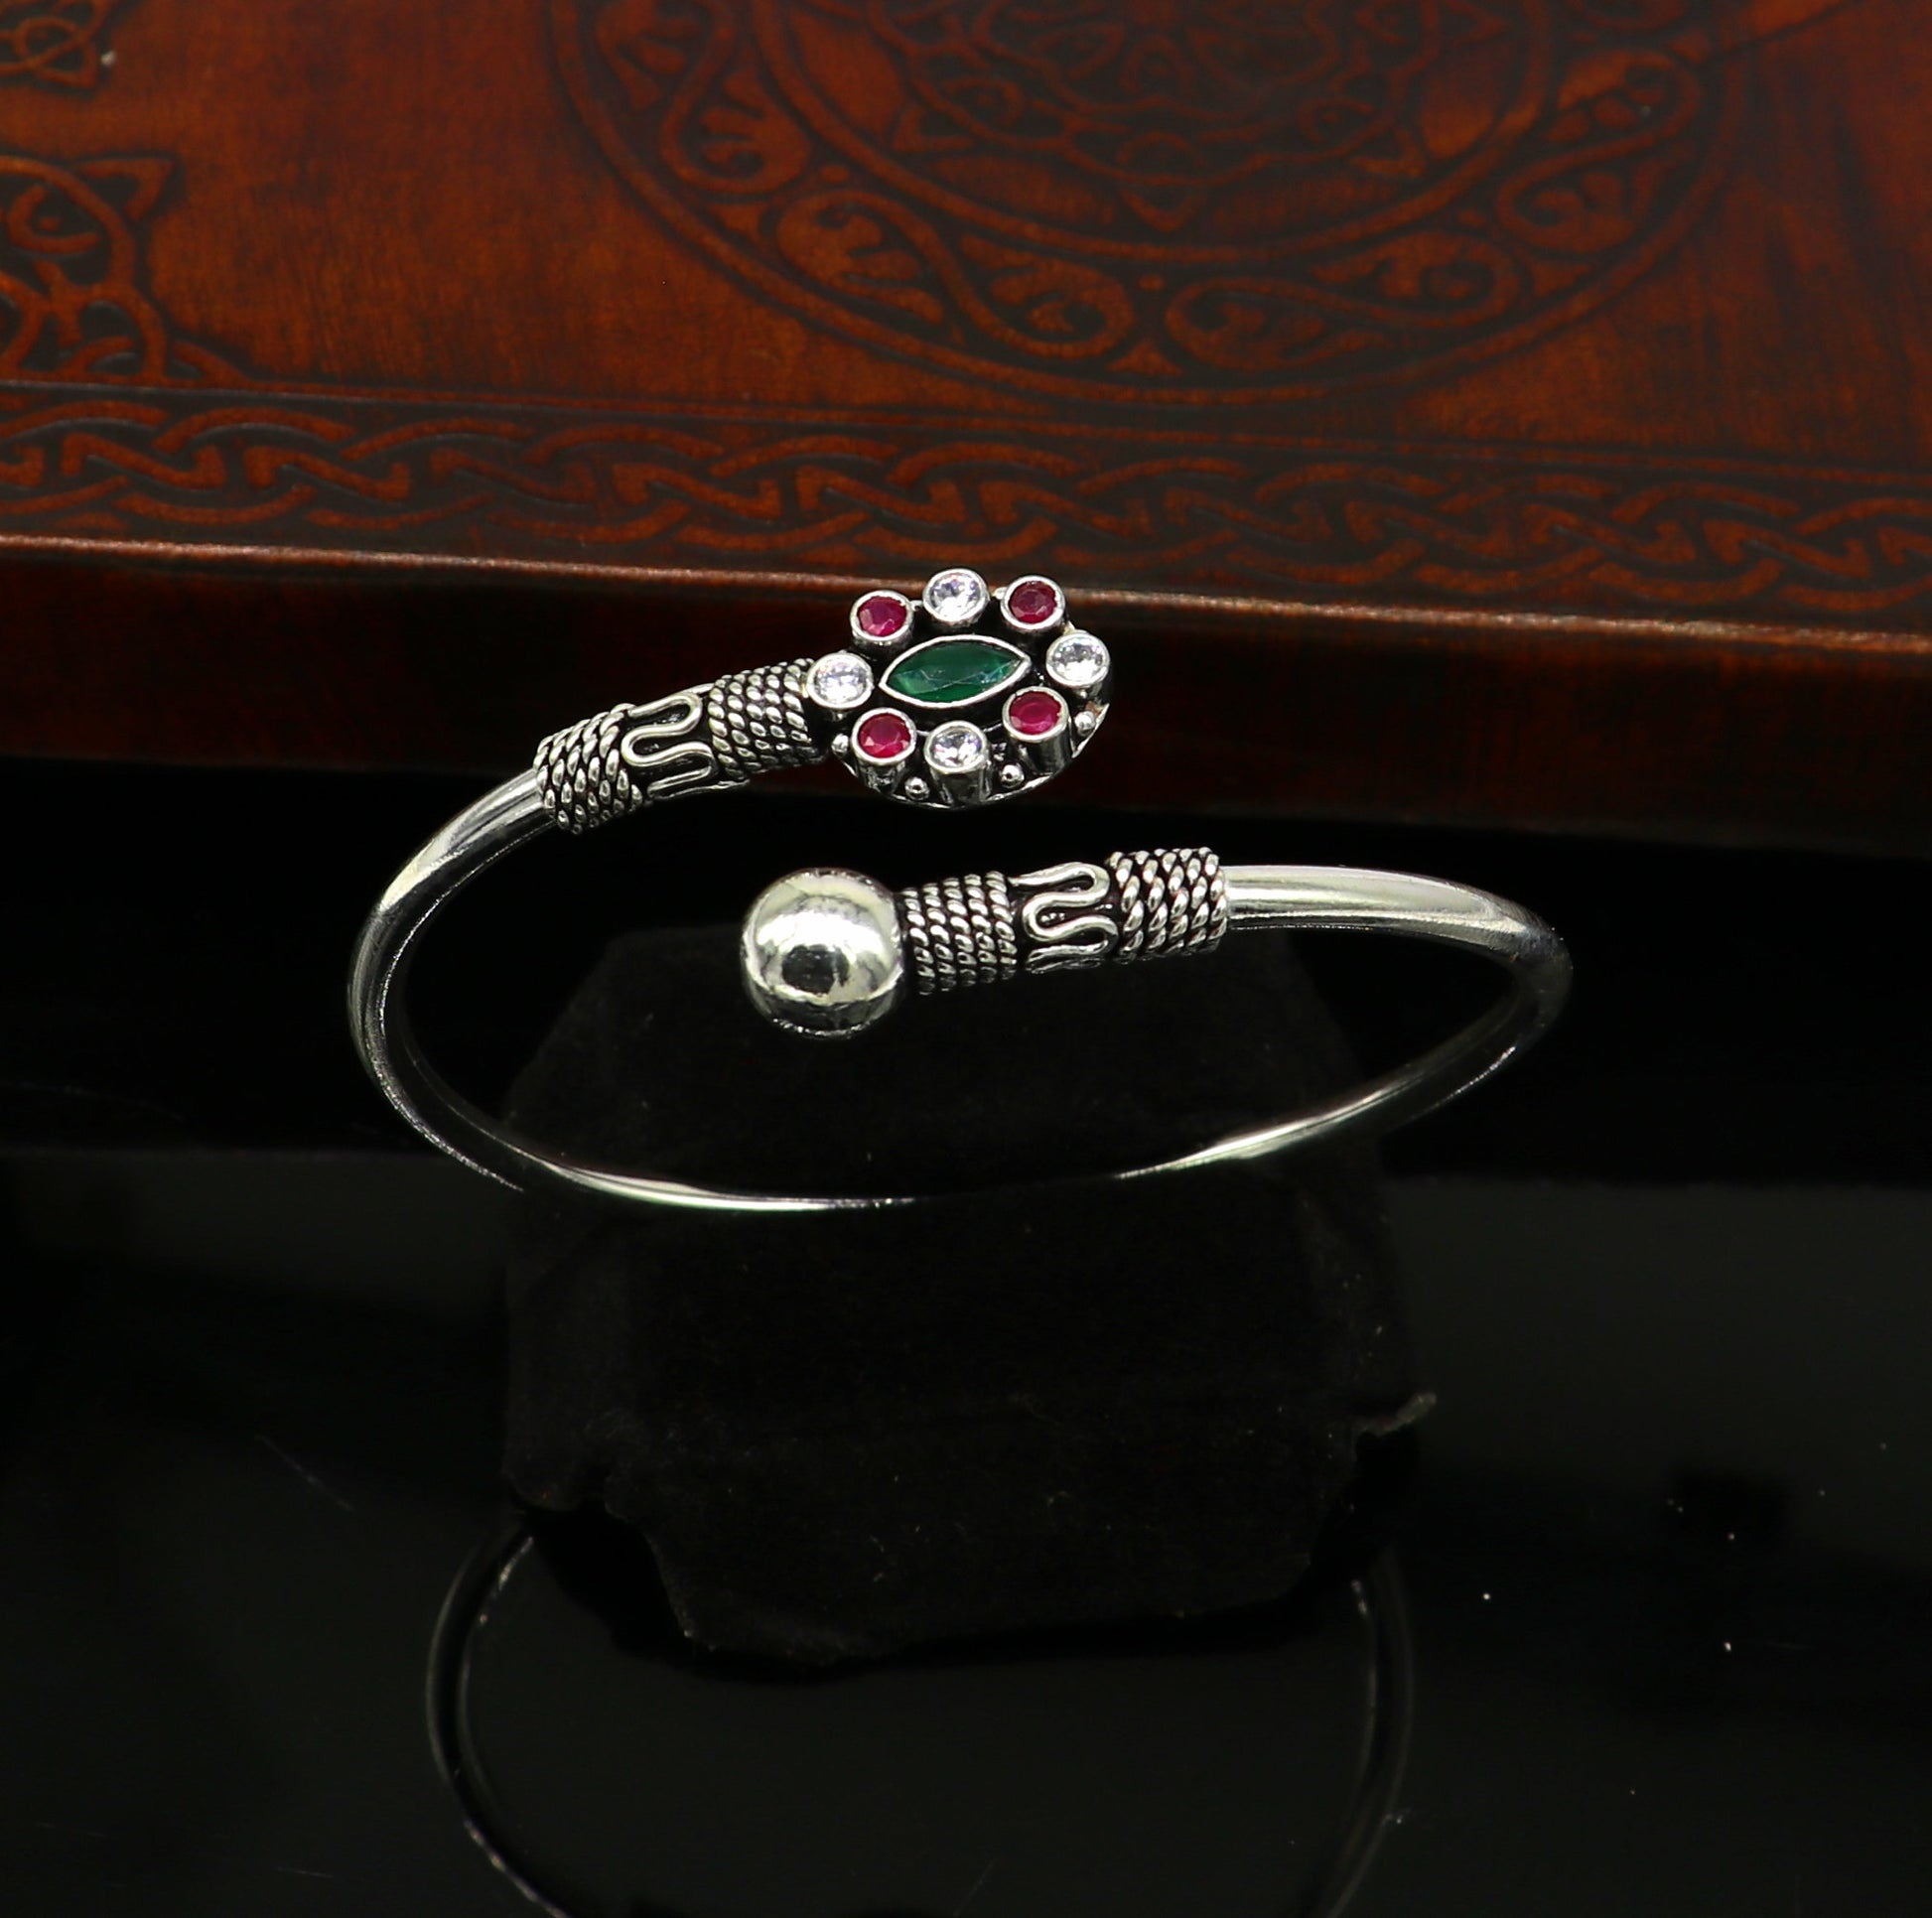 Customized design 925 sterling silver handcrafted design bangle bracelet kada, Vintage fancy stylish oxidized tribal jewelry nssk279 - TRIBAL ORNAMENTS